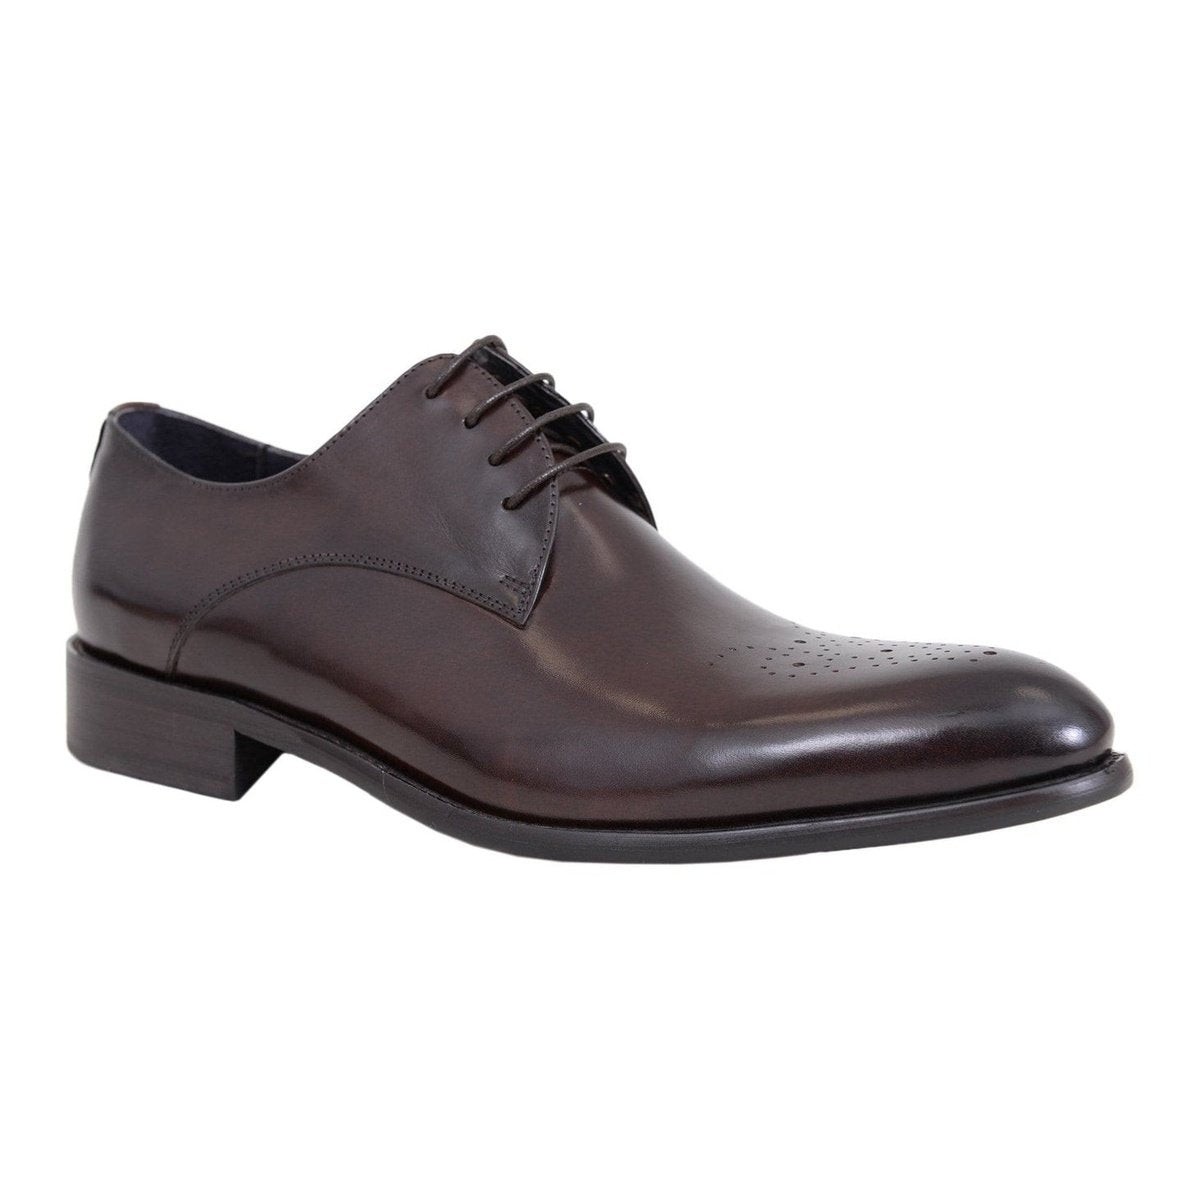 Carrucci Shoes For Amazon 9 D-M Carrucci Men&#39;s Genuine Leather Brown Lace Up Oxford Brogues Dress Shoes